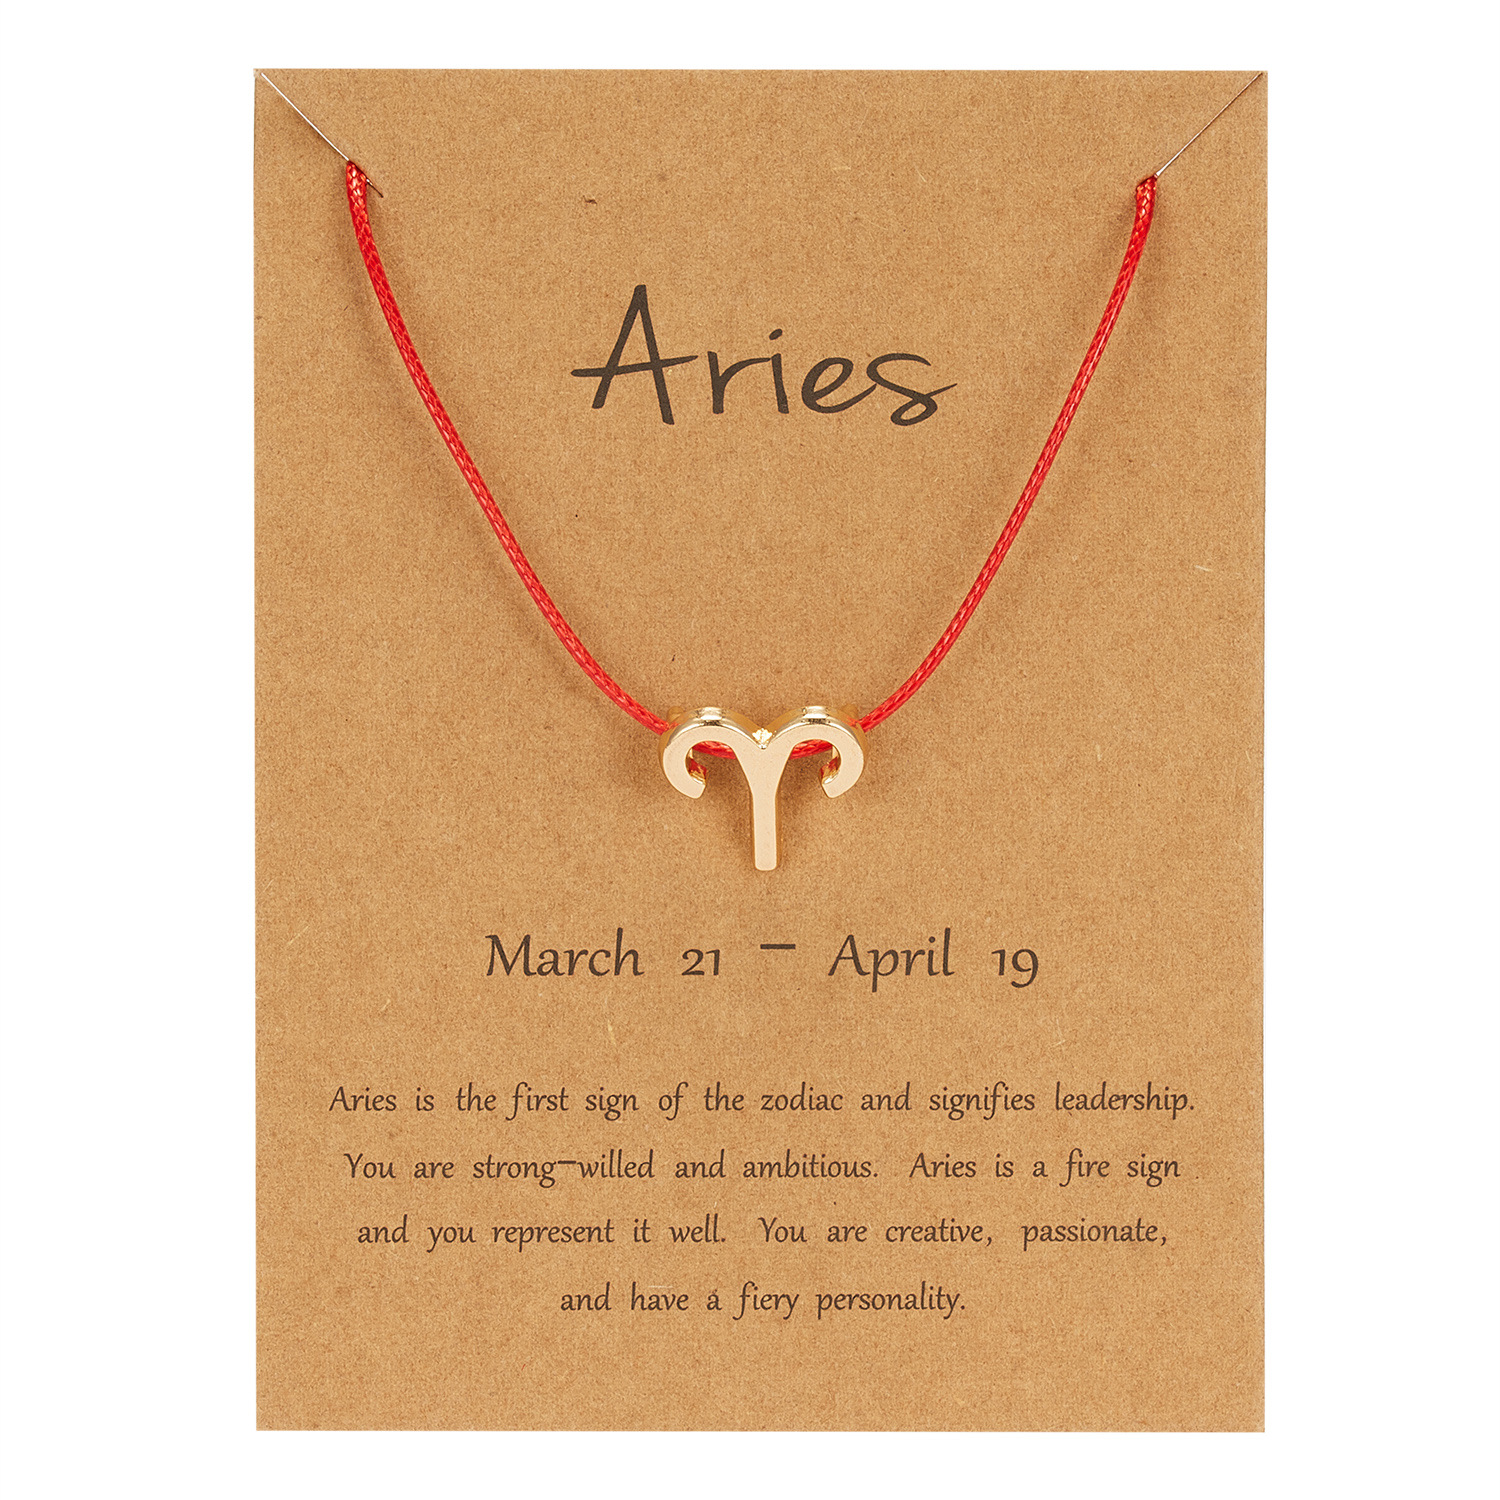 3:Aries(Red Rope)